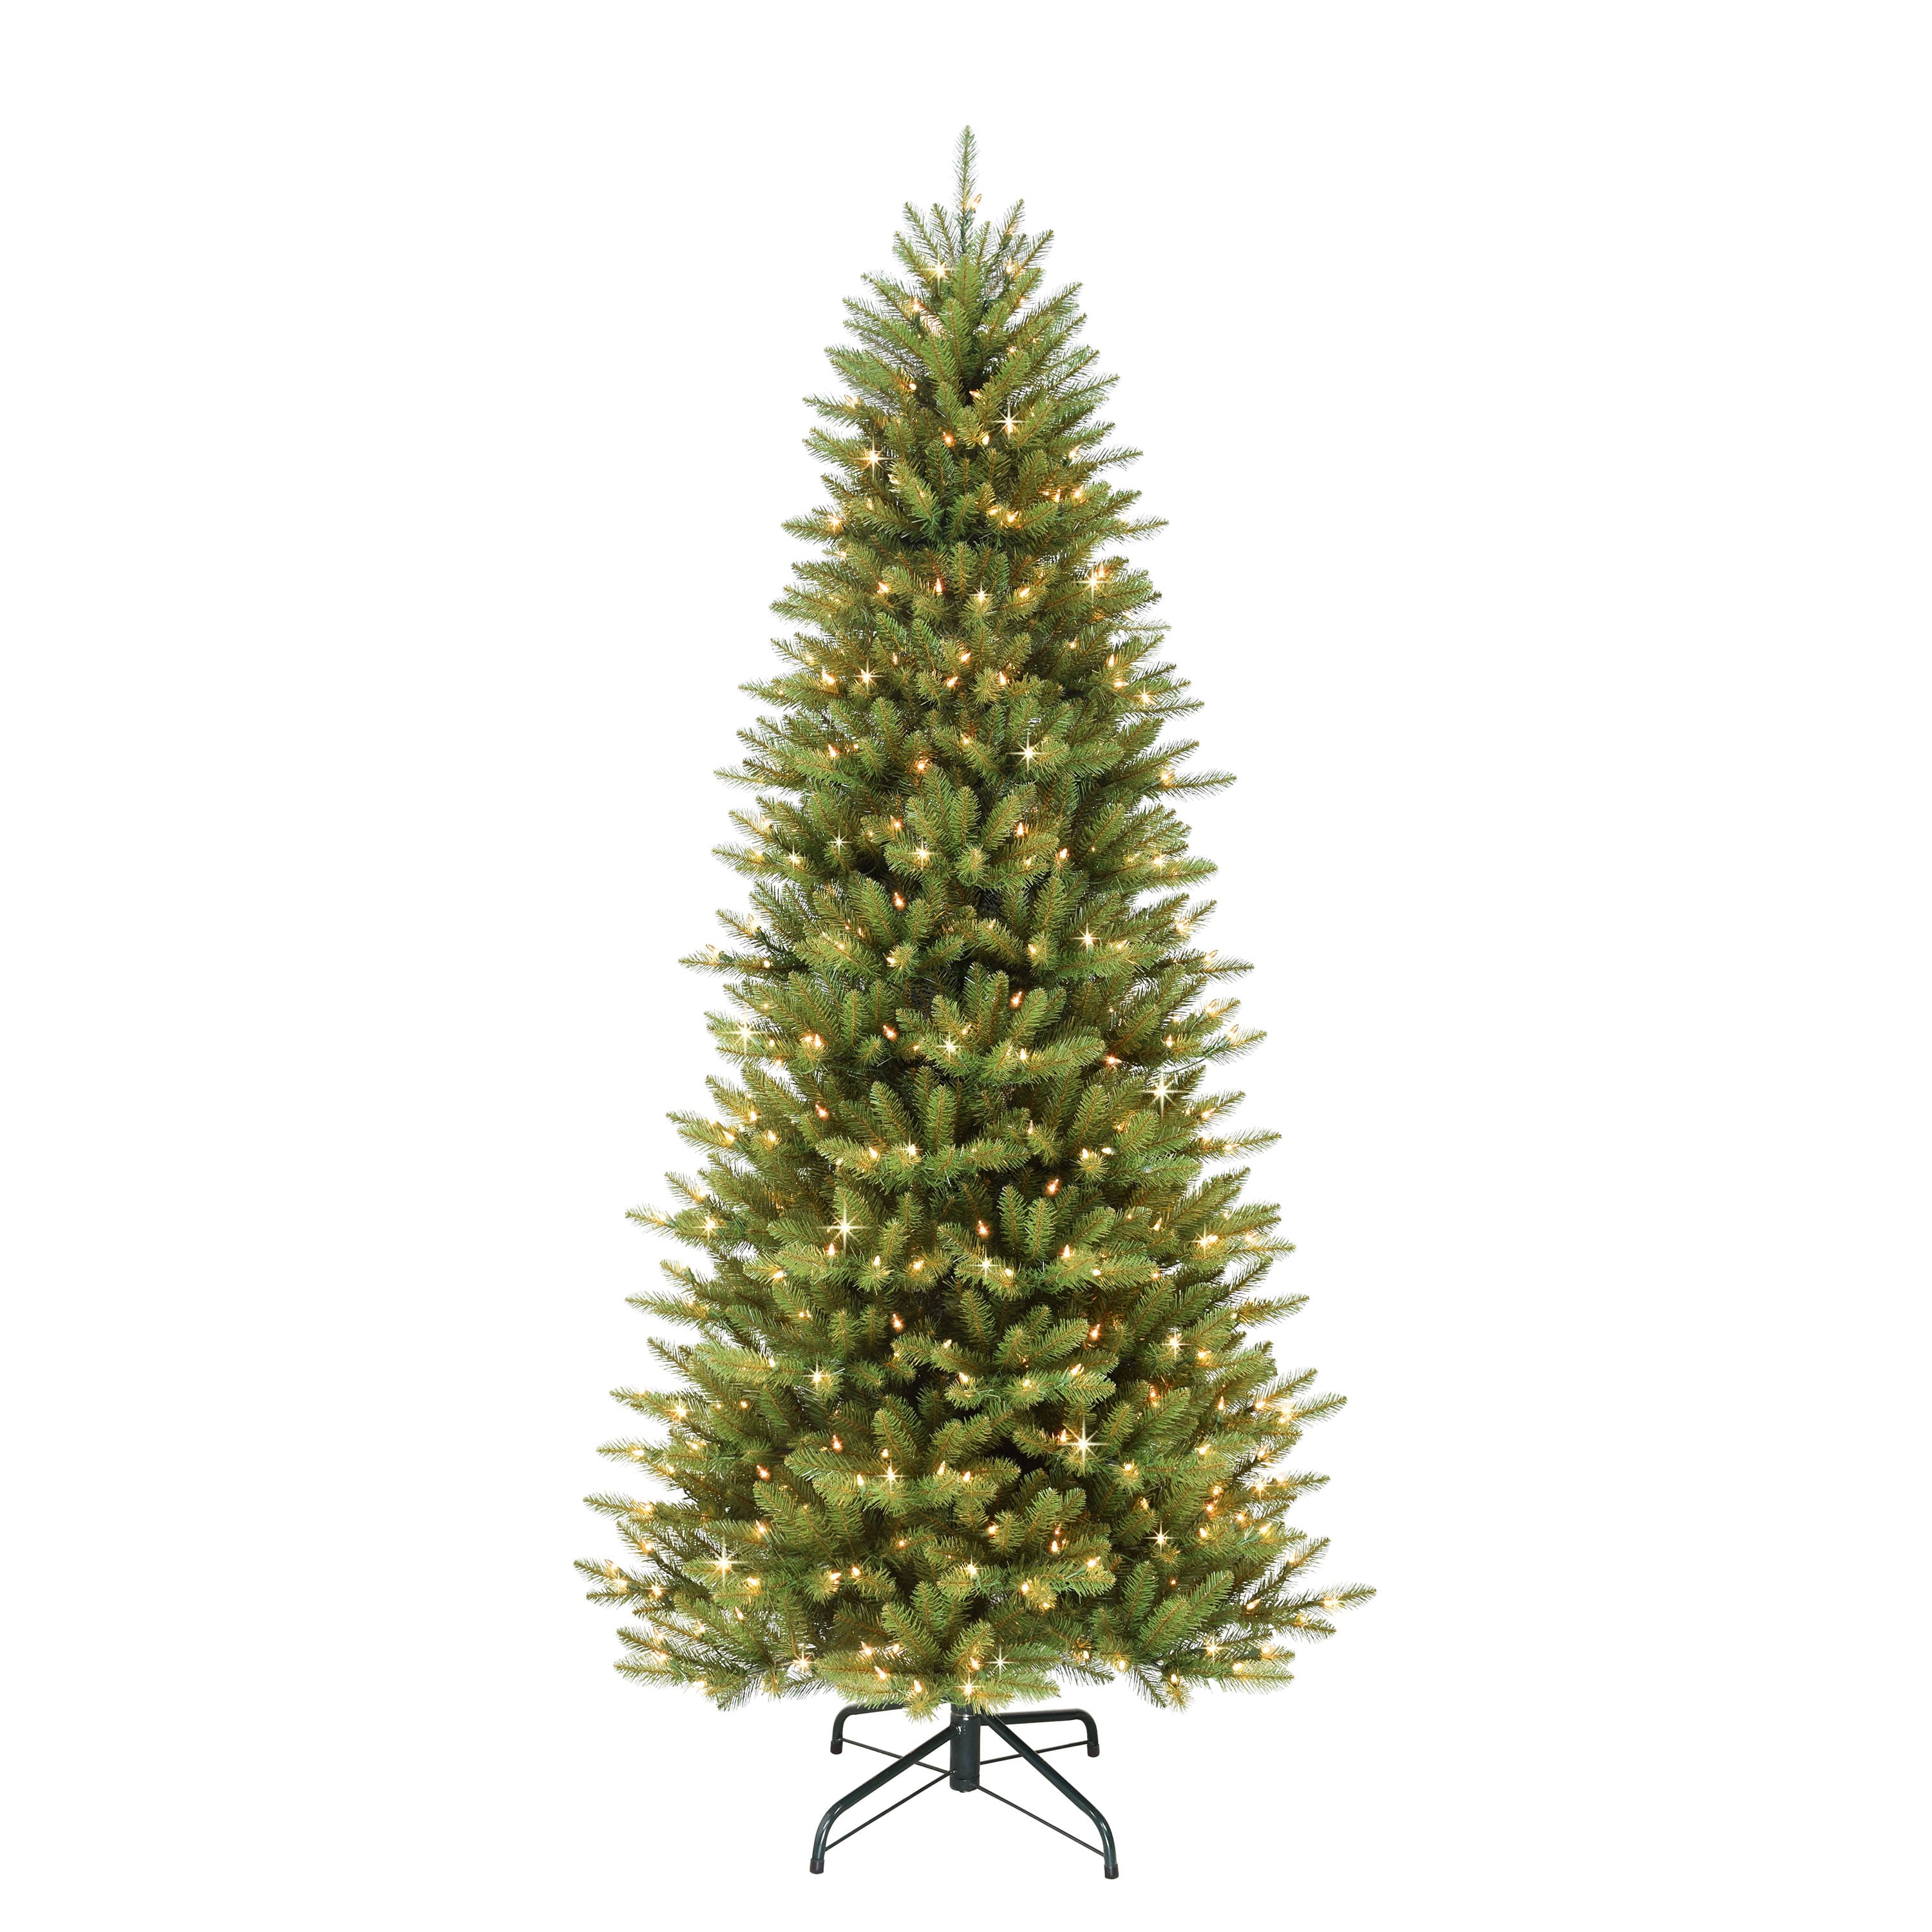 7.5ft. Pre-Lit Slim Fraser Fir Artificial Christmas Tree, Clear Lights